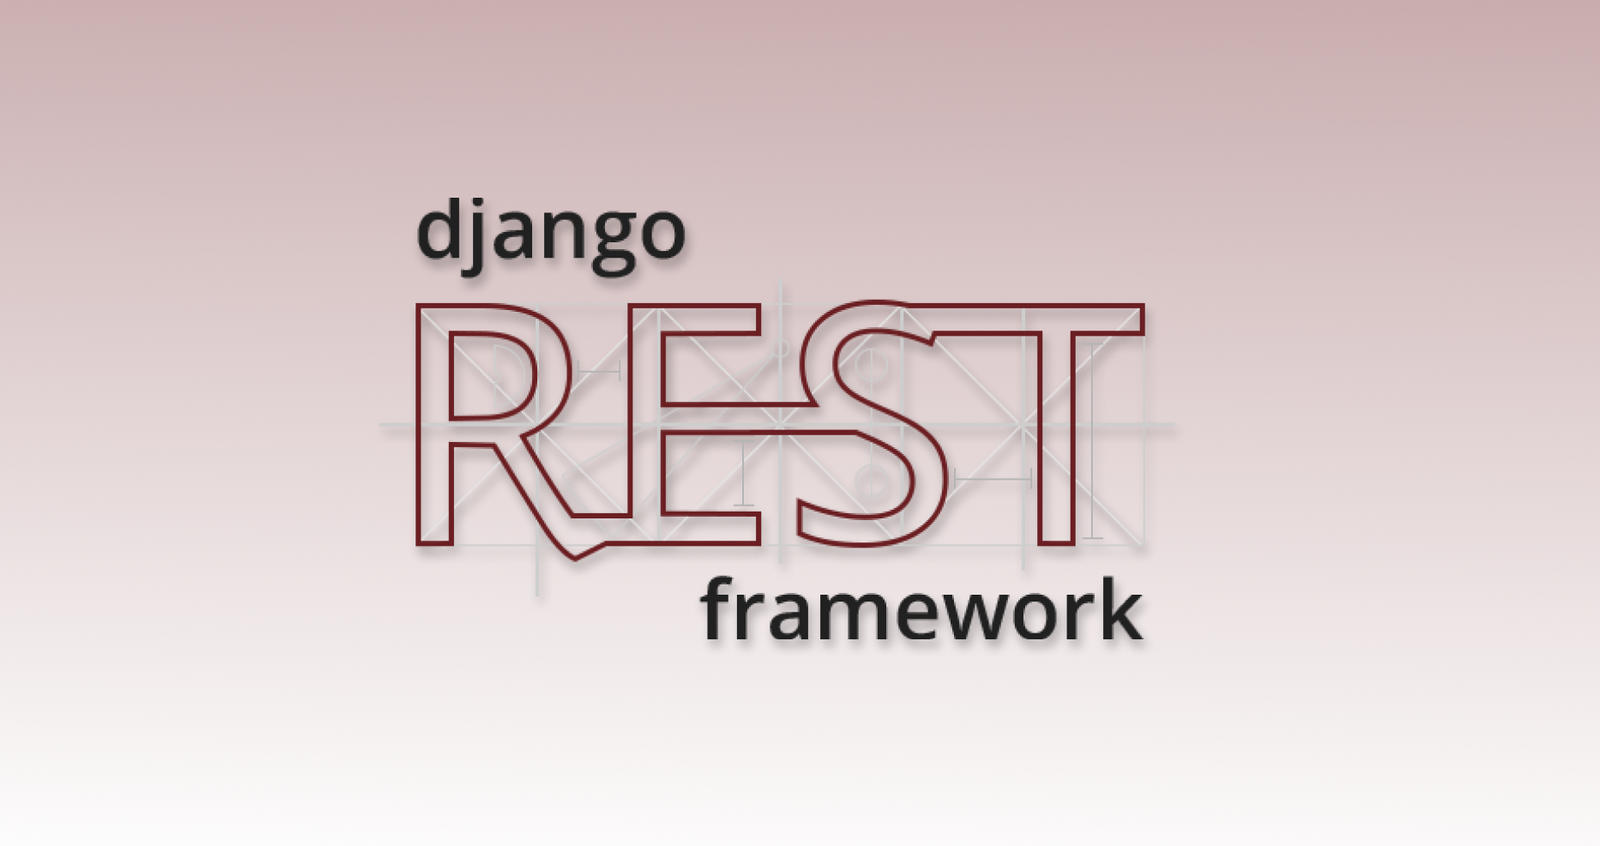 Create Your First REST API in Django Rest Framework